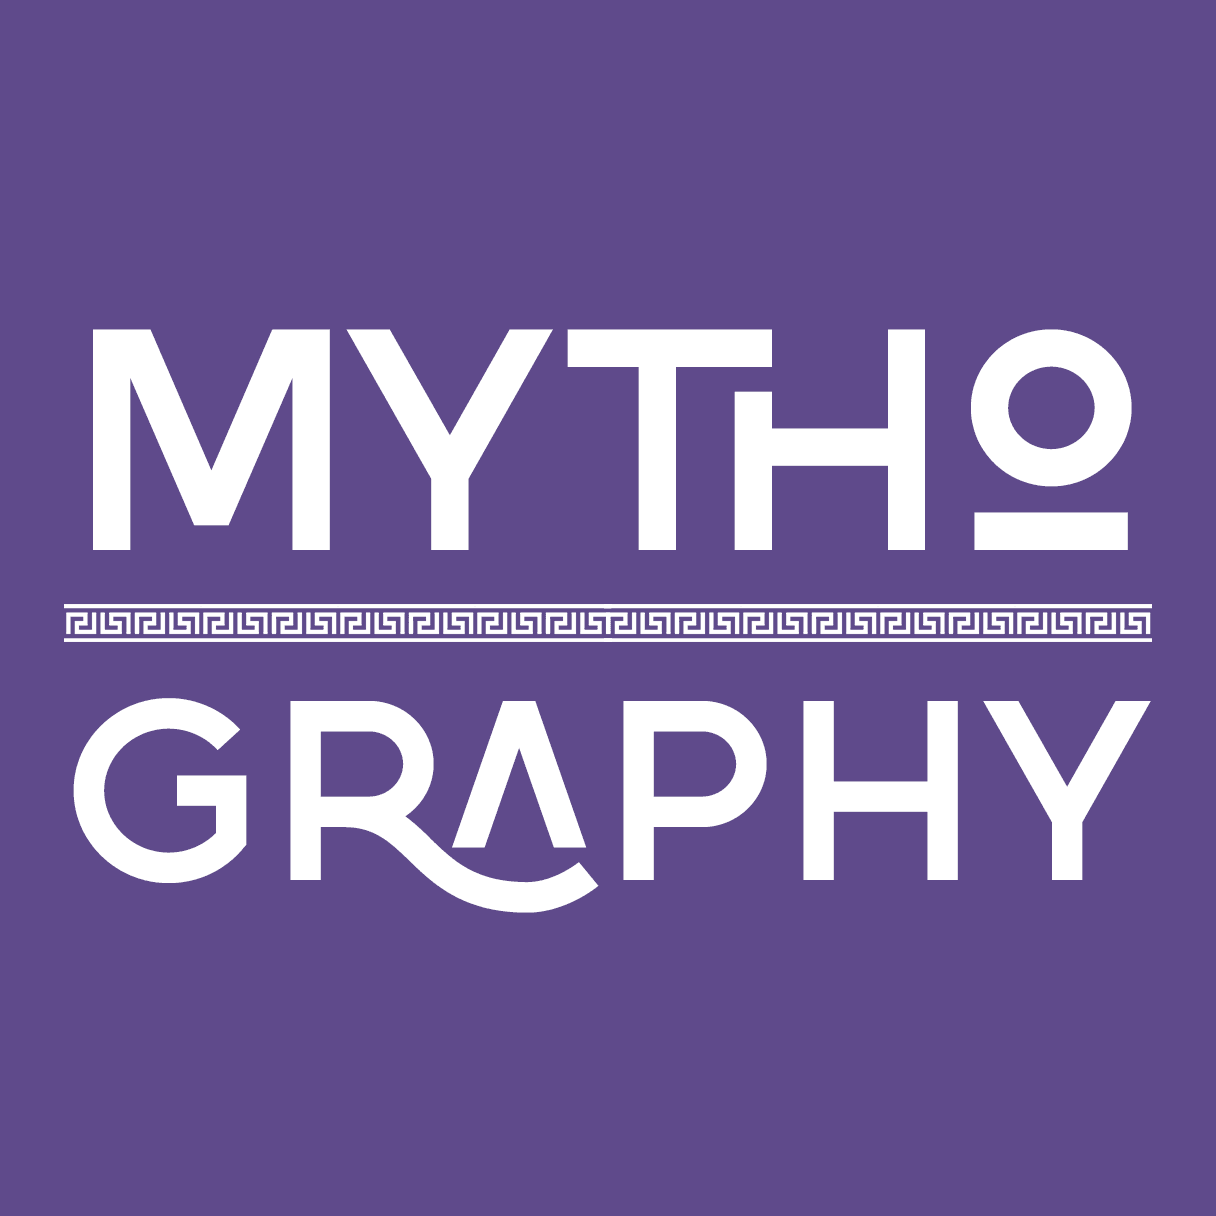 Mythography Studios Crypto